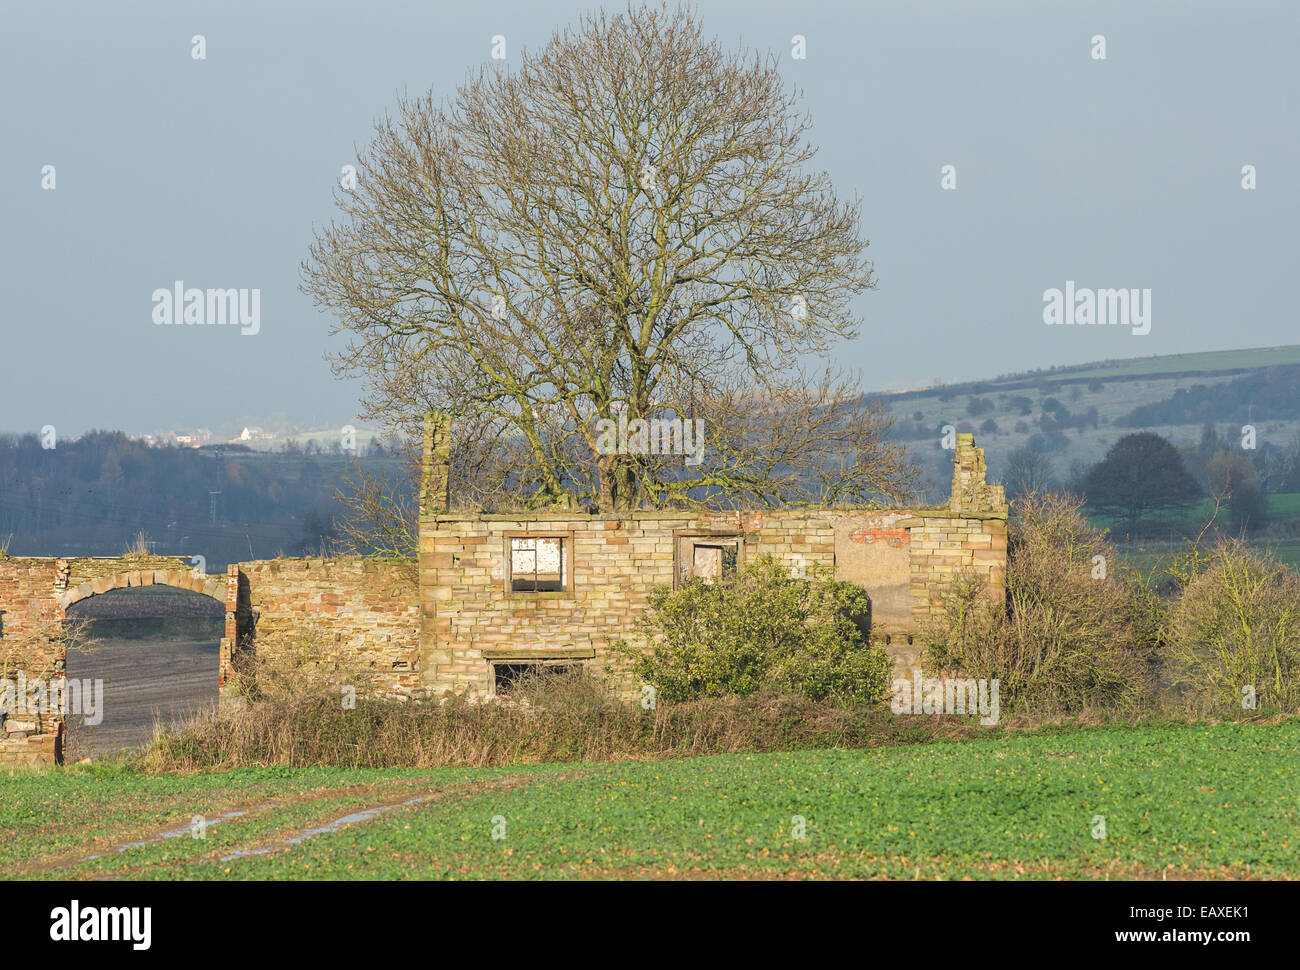 Ruined stone built farm house with tree. Stock Photo